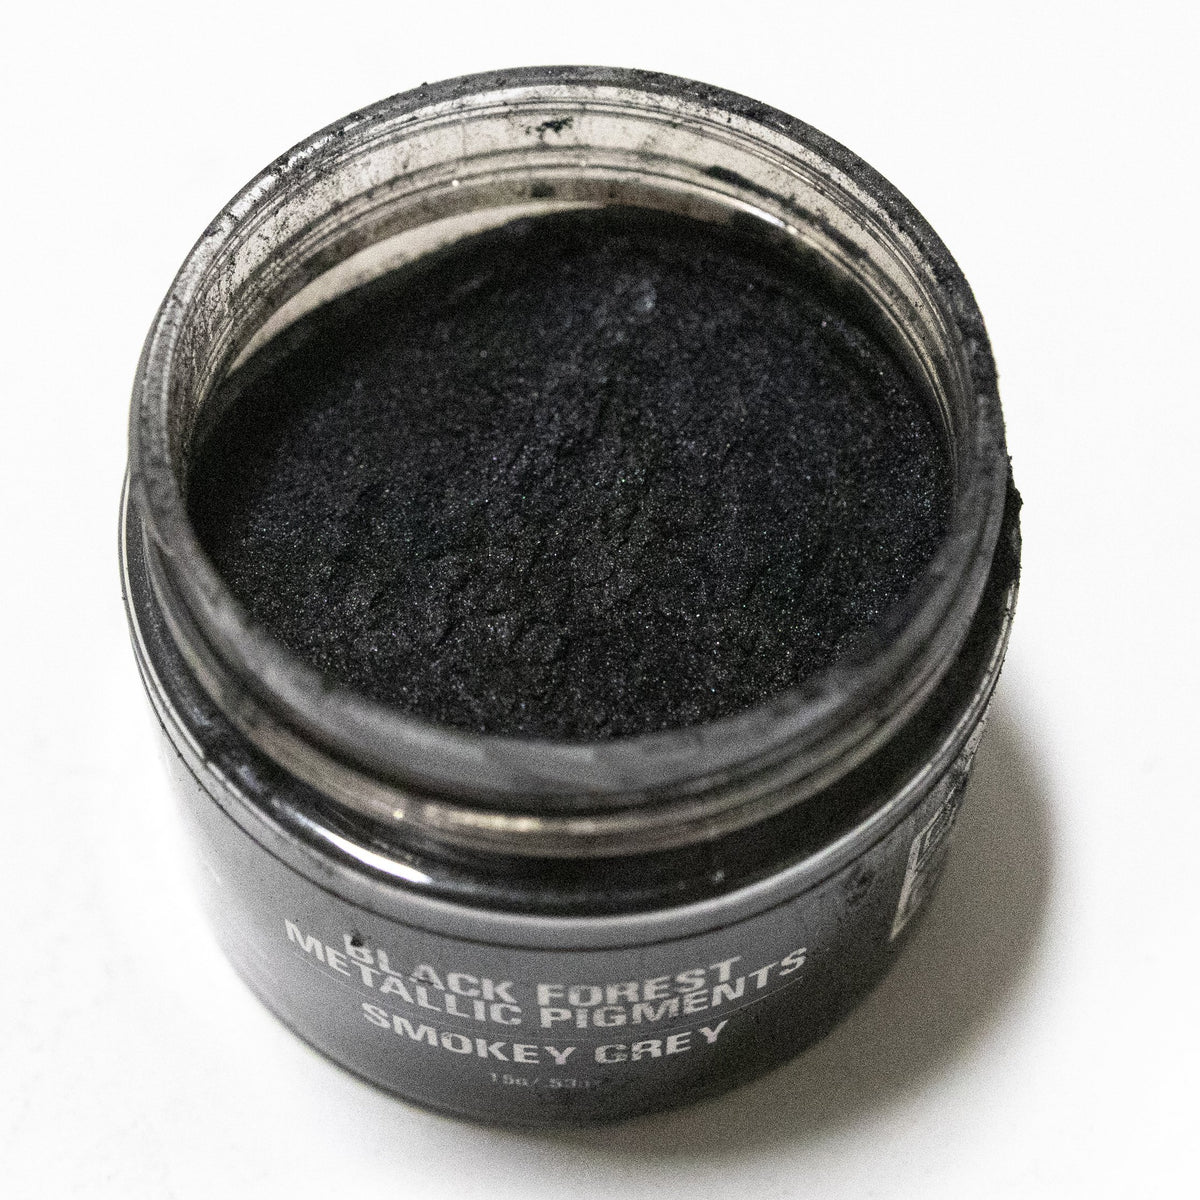 Smokey Grey - Black Forest Metallic Pigment